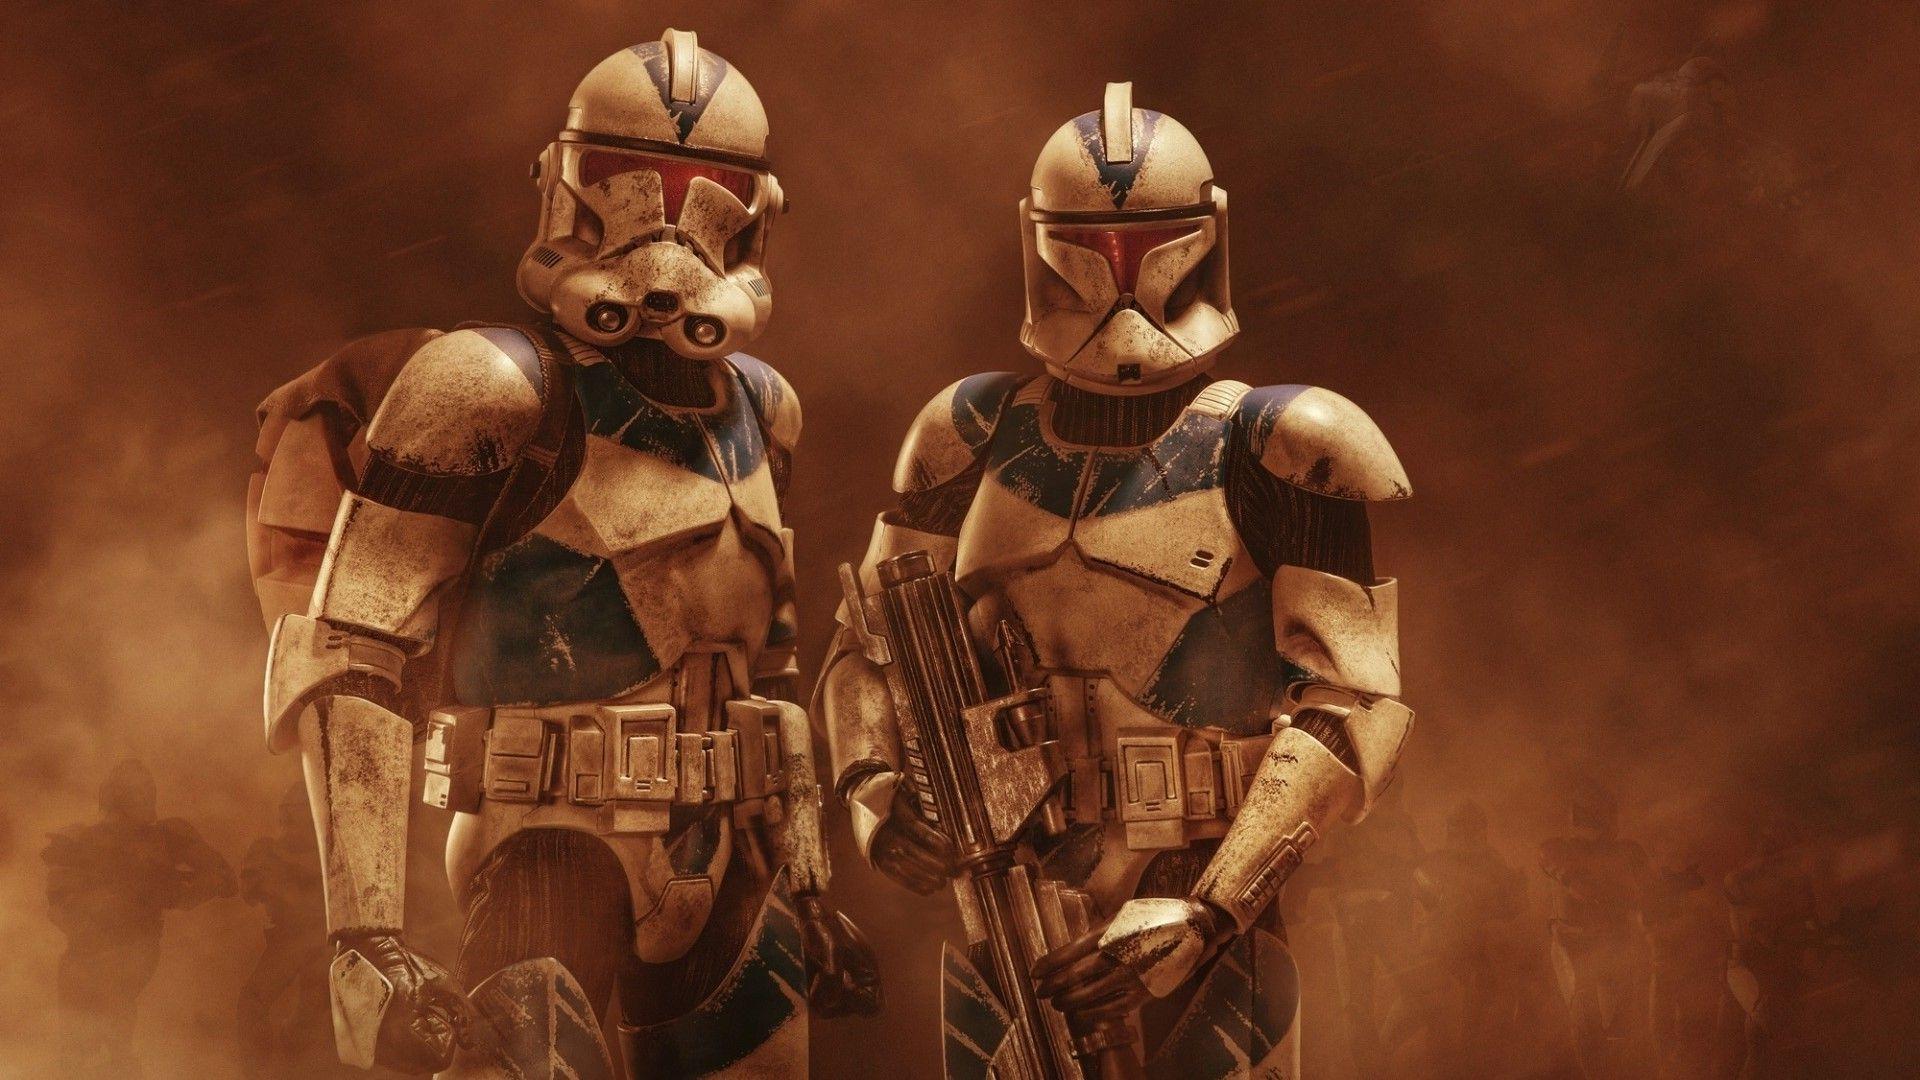 Clone Trooper Wallpaper. Love Wallpaper. Clone trooper